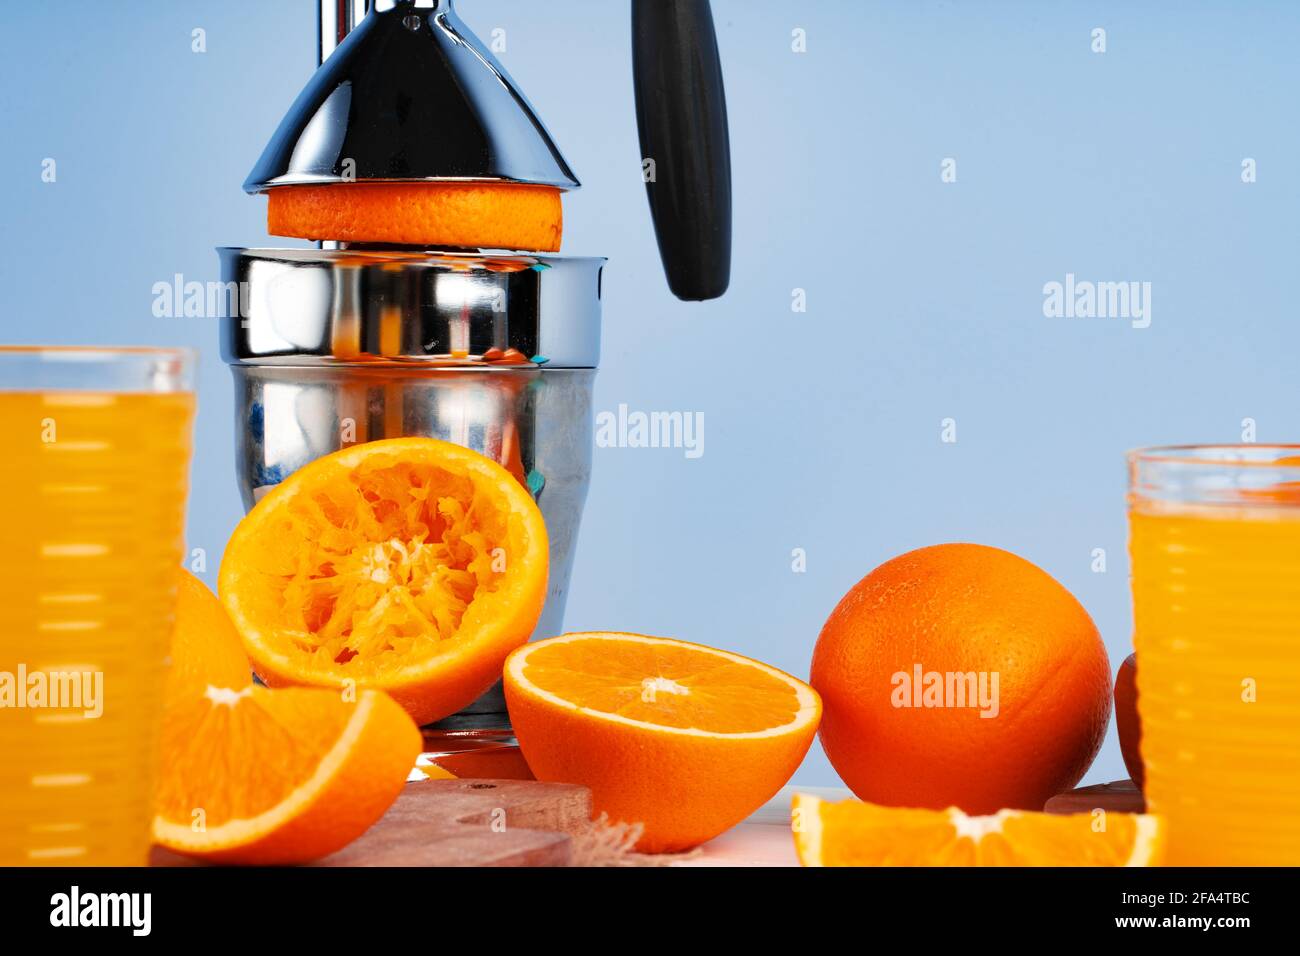 Mano metálica exprimidor de jugo de naranja de cerca Fotografía de stock -  Alamy